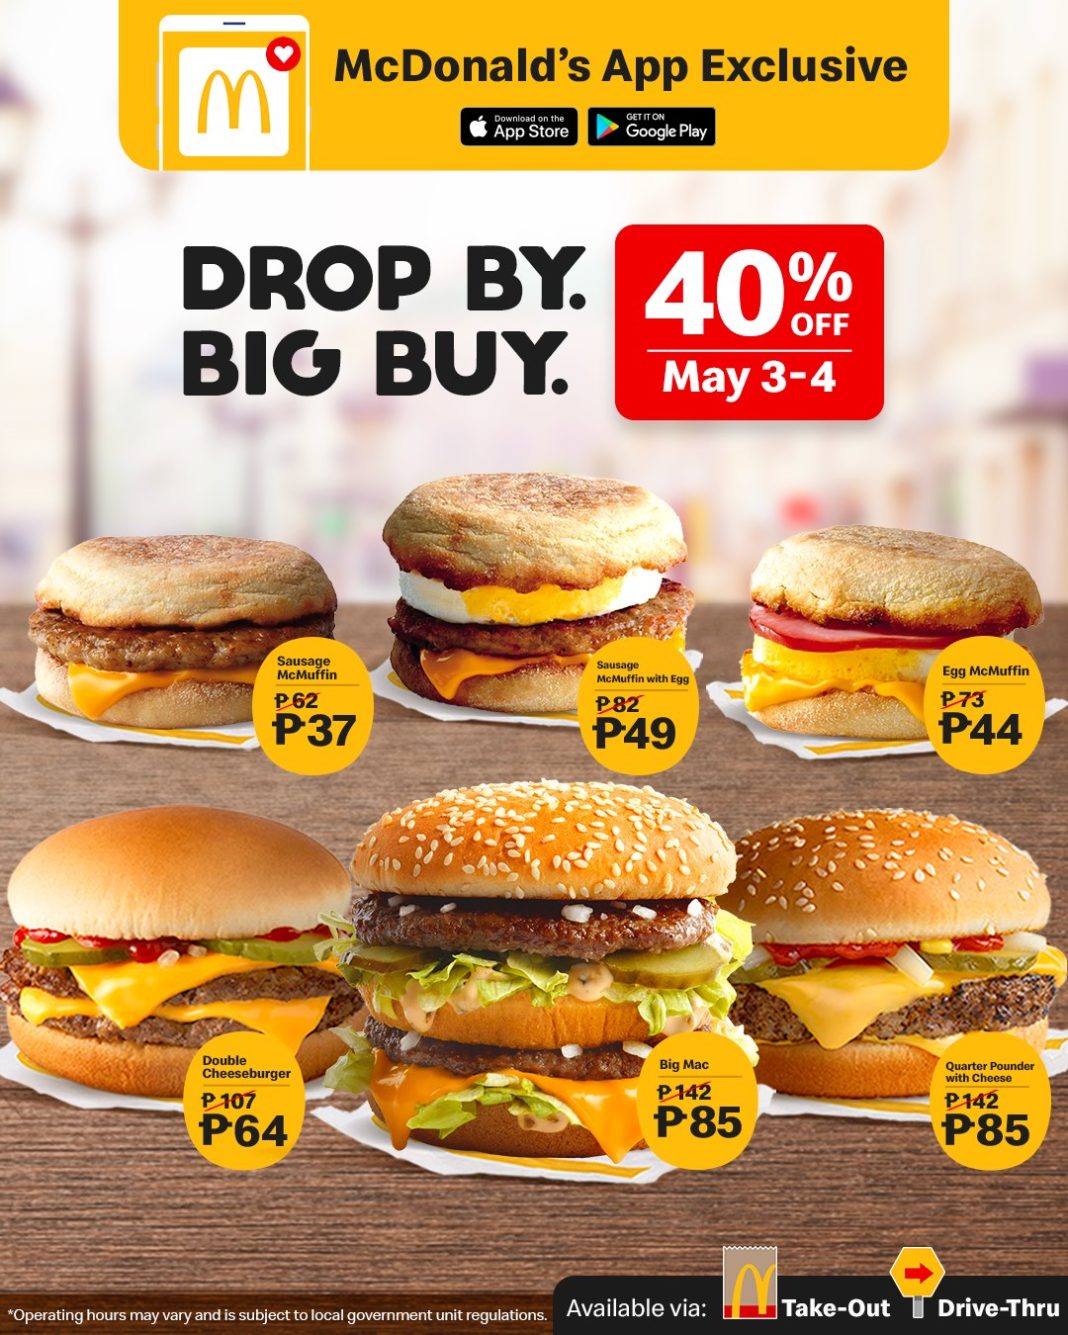 McDonald’s 40 OFF Drop By Big Buy Promo Manila On Sale